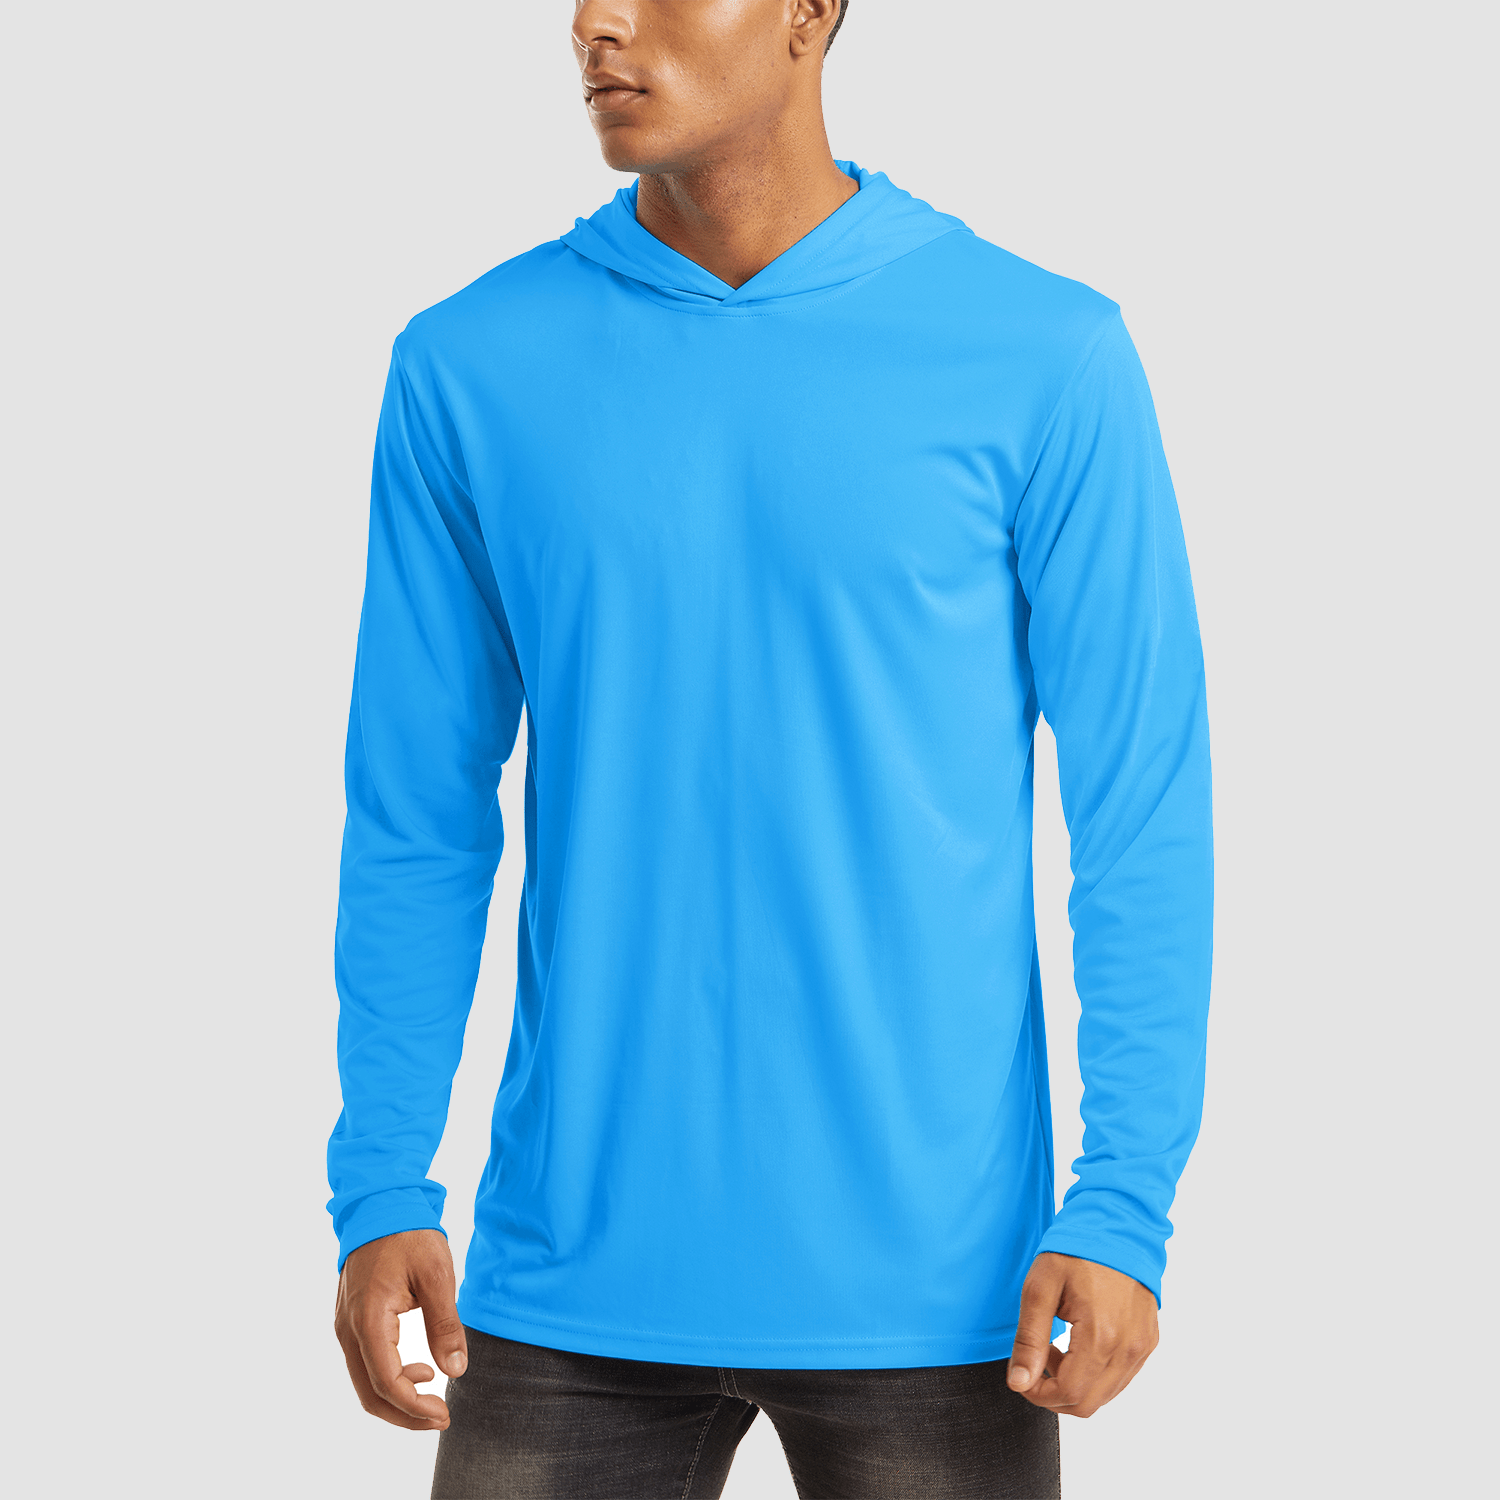 【Buy 4 Get 4th Free】Men's Long Sleeve Hooded Shirt UPF 50+ Athletic Shirts, Black / XL